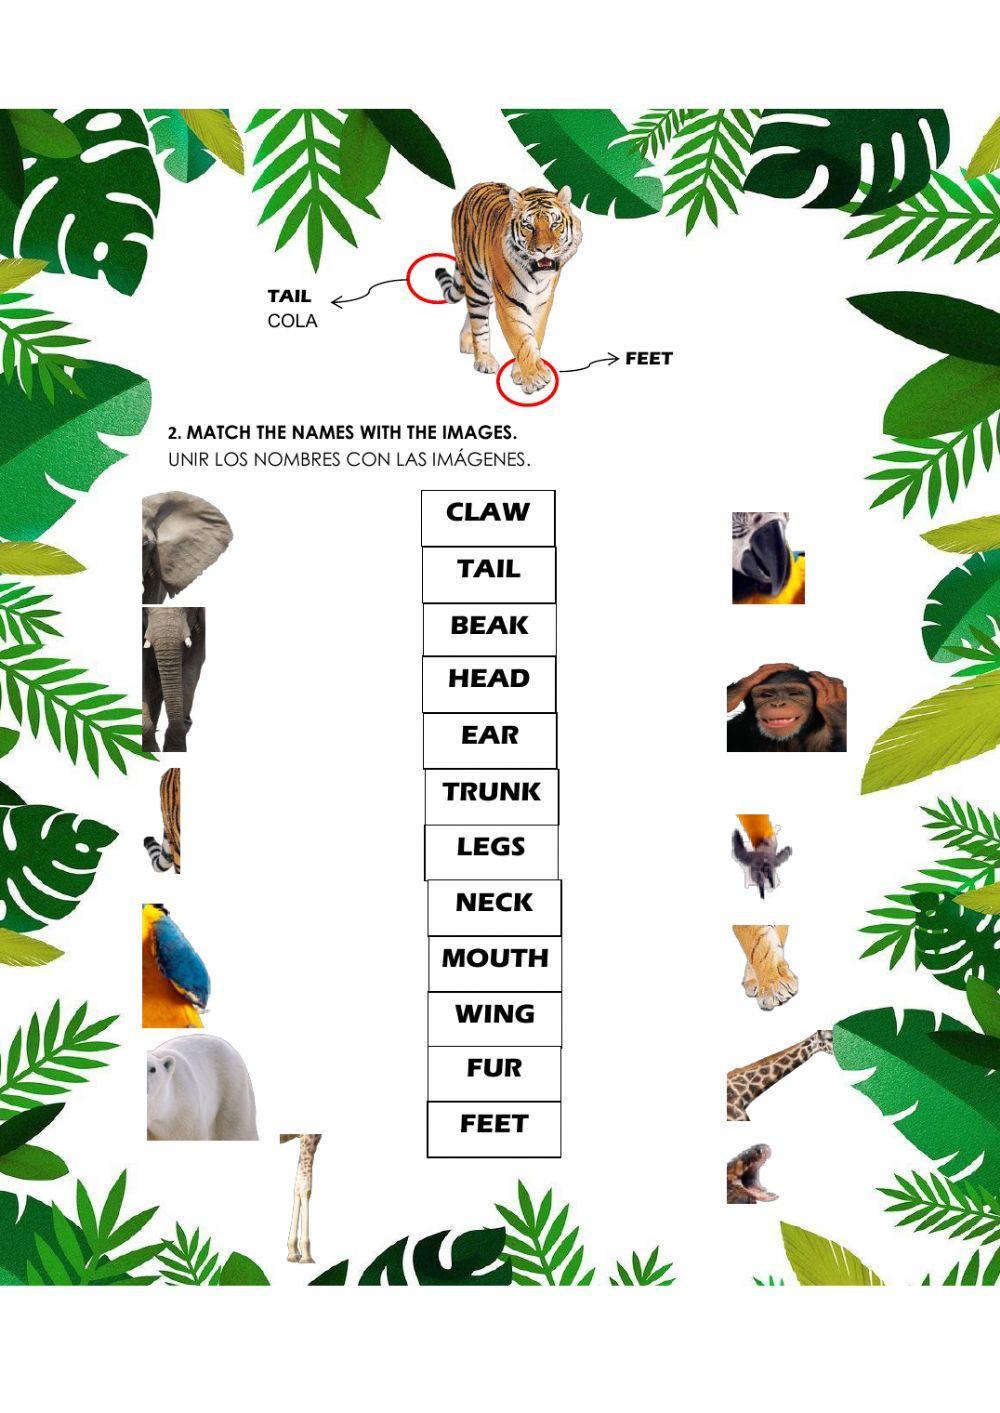 Description of animals